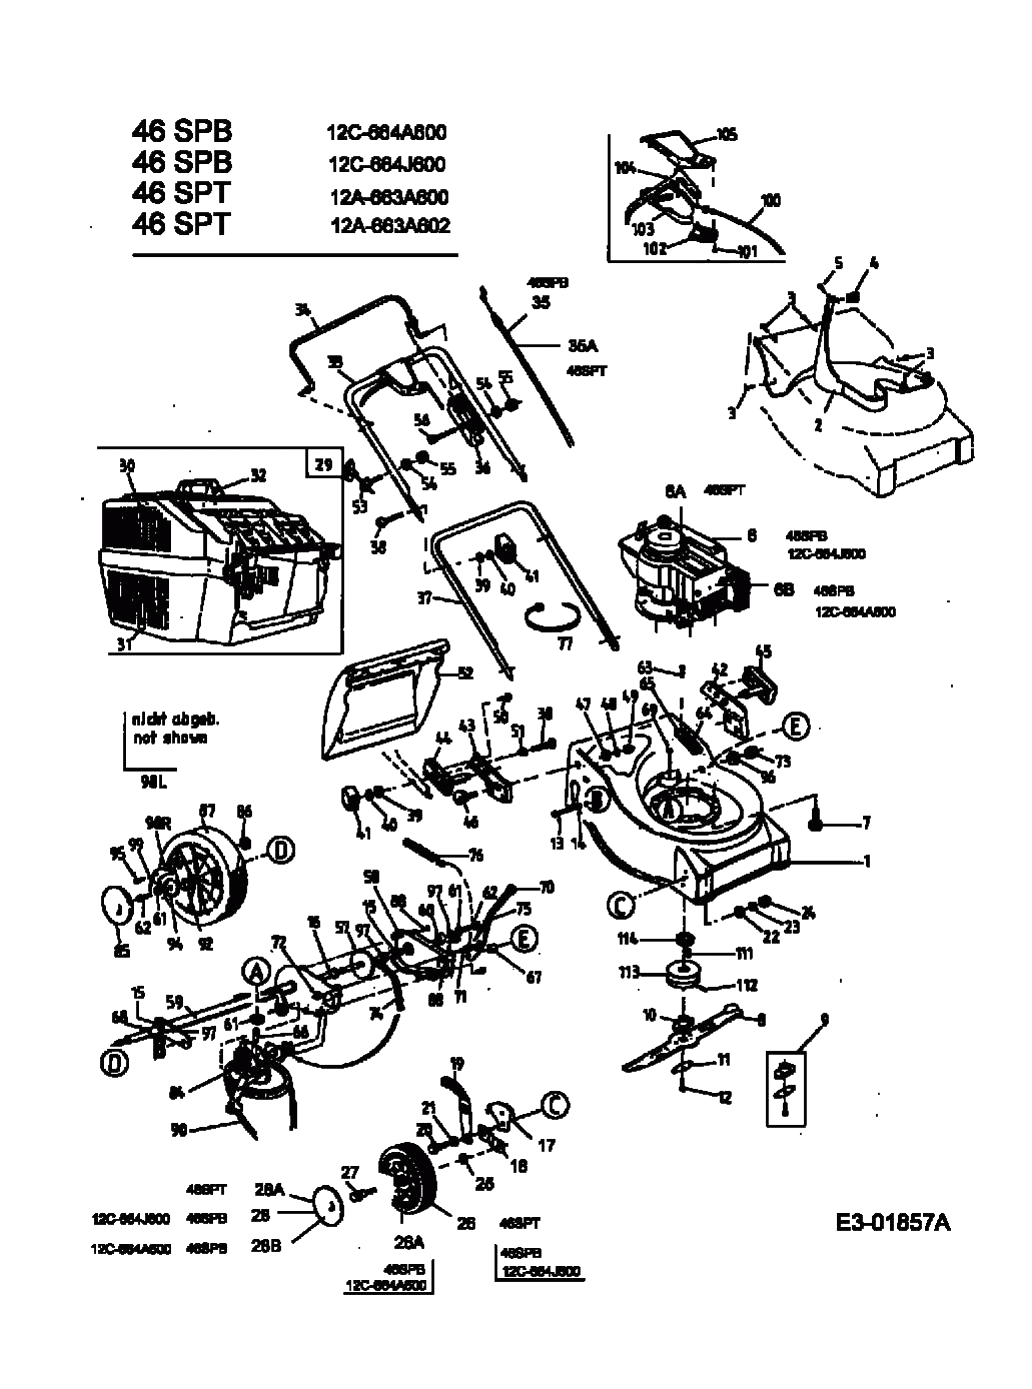 MTD Артикул 12A-663A602 (год выпуска 2003). Основная деталировка